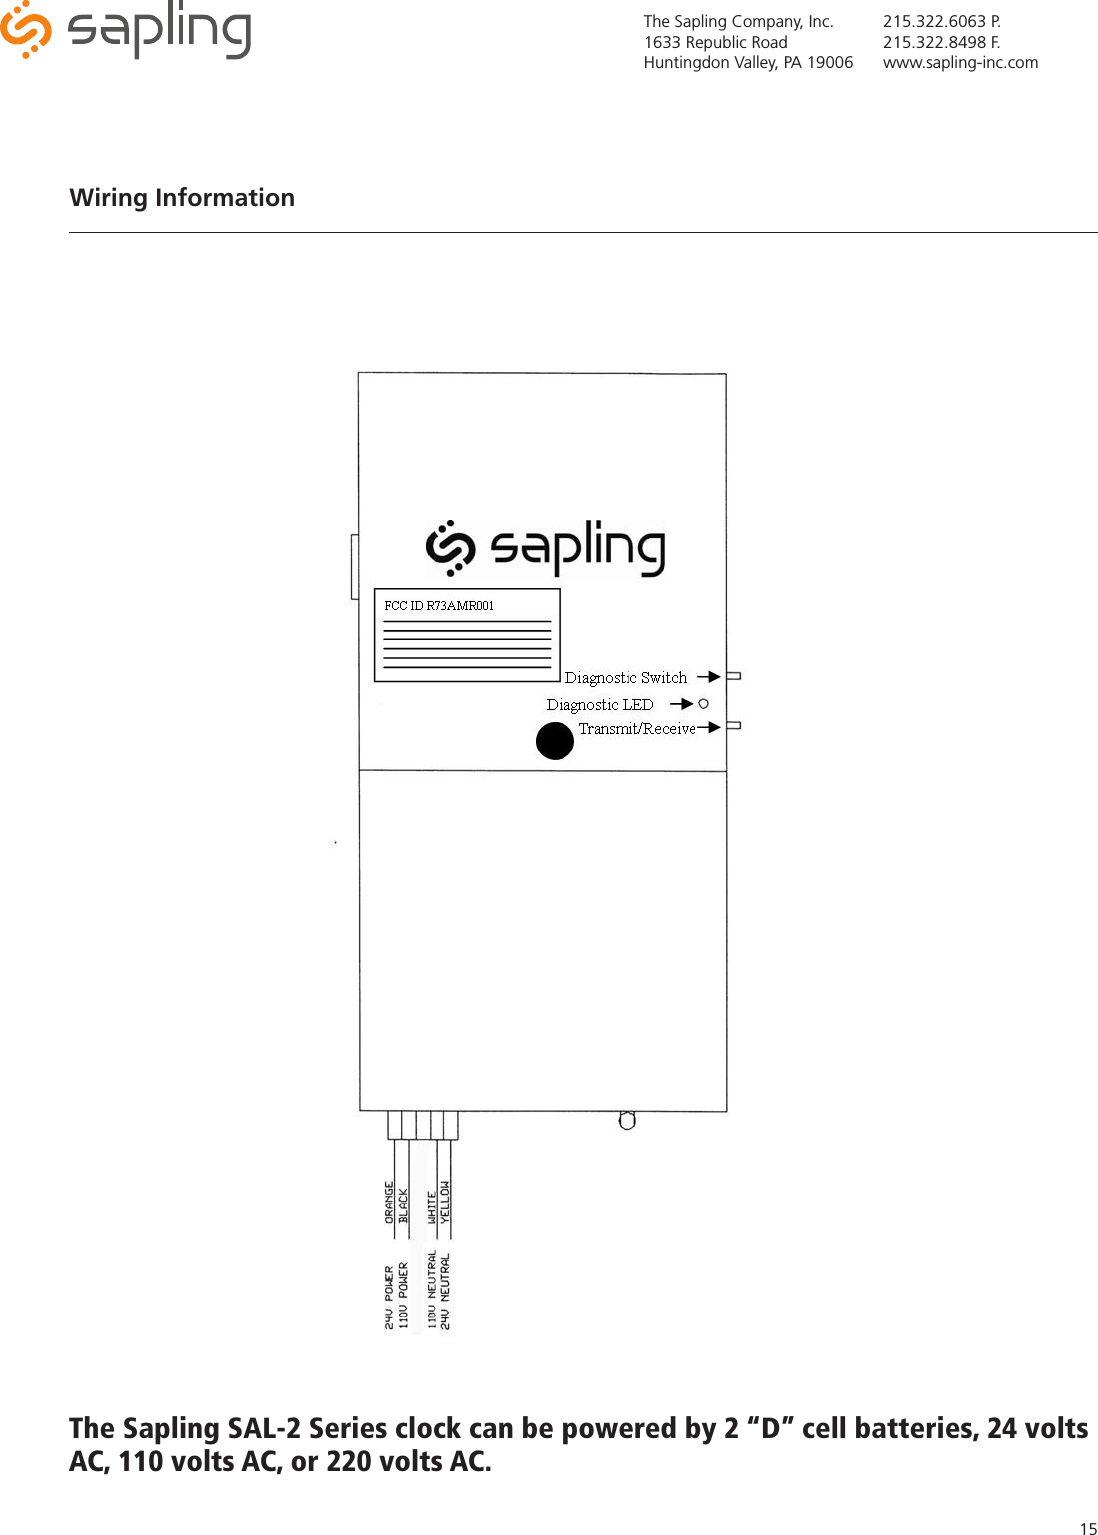 The Sapling Company, Inc.1633 Republic RoadHuntingdon Valley, PA 19006215.322.6063 P.215.322.8498 F.www.sapling-inc.com15The Sapling SAL-2 Series clock can be powered by 2 “D” cell batteries, 24 volts AC, 110 volts AC, or 220 volts AC.Wiring Information 